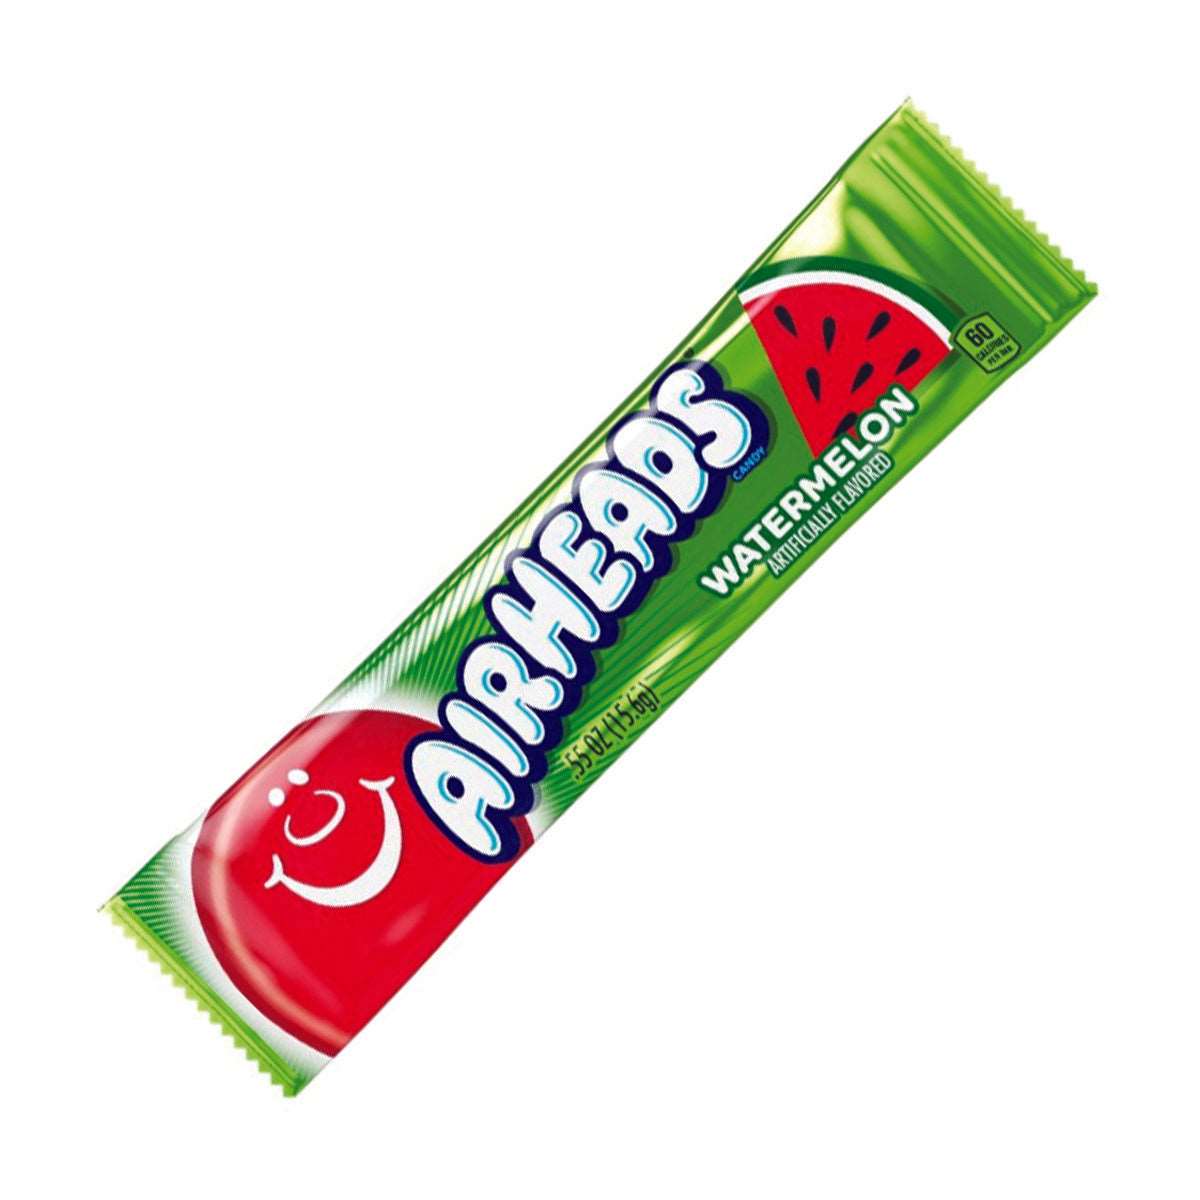 Airheads Watermelon - Caramella morbida gusto anguria (16g) bundle candy online gluten-free